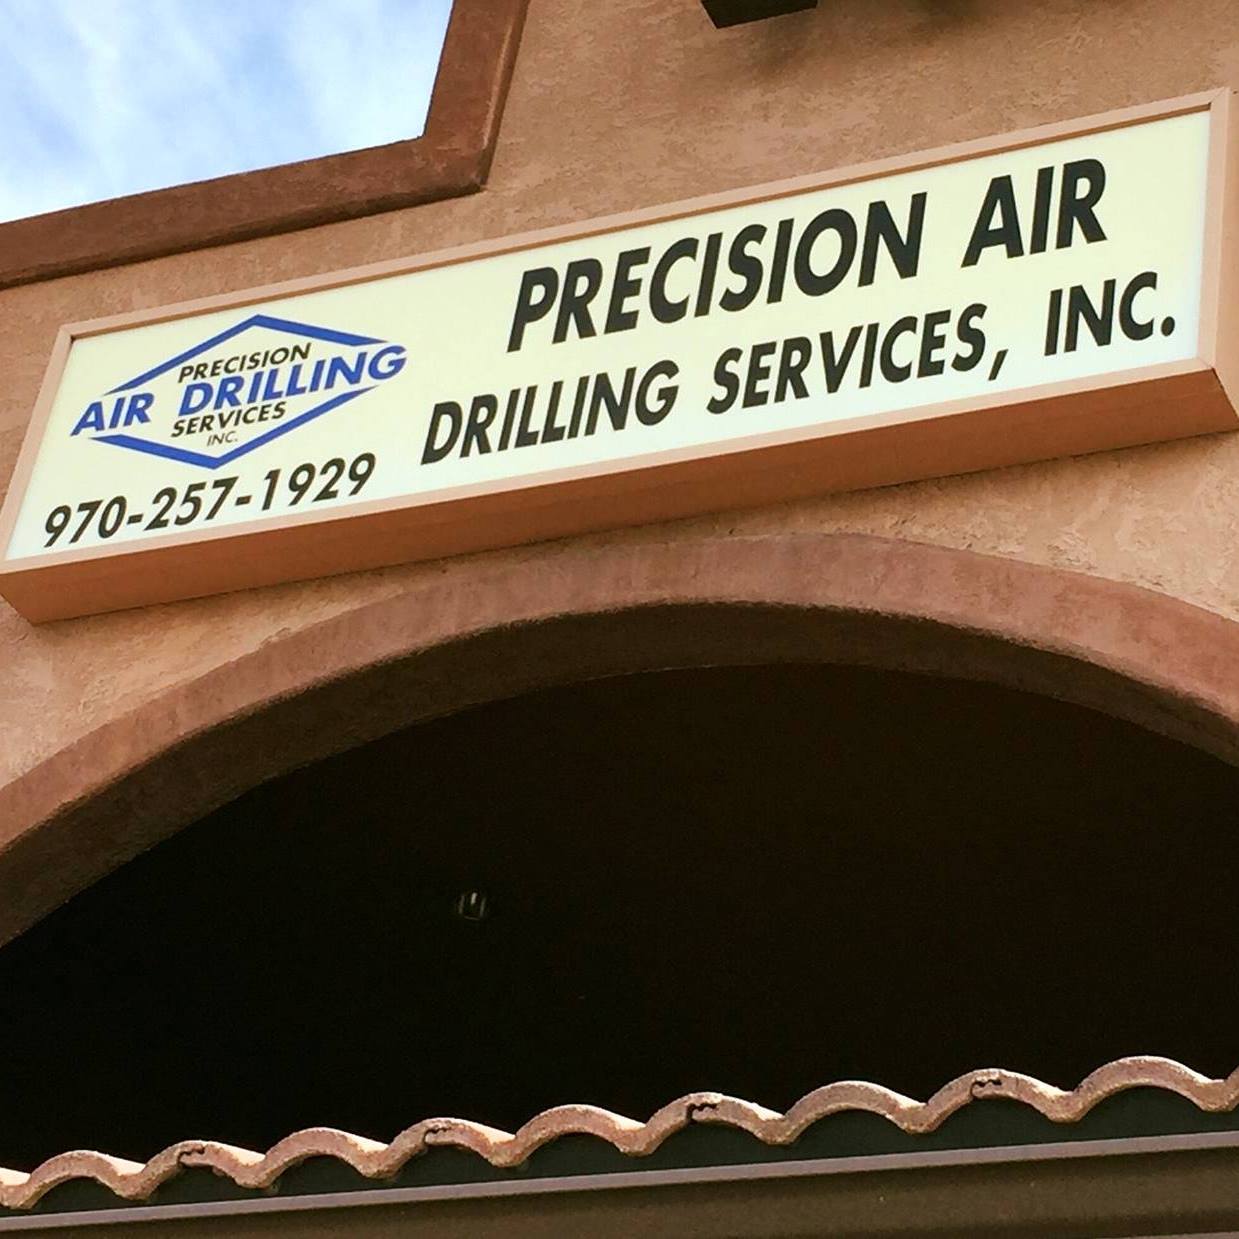 Precision Air Drilling Services logo